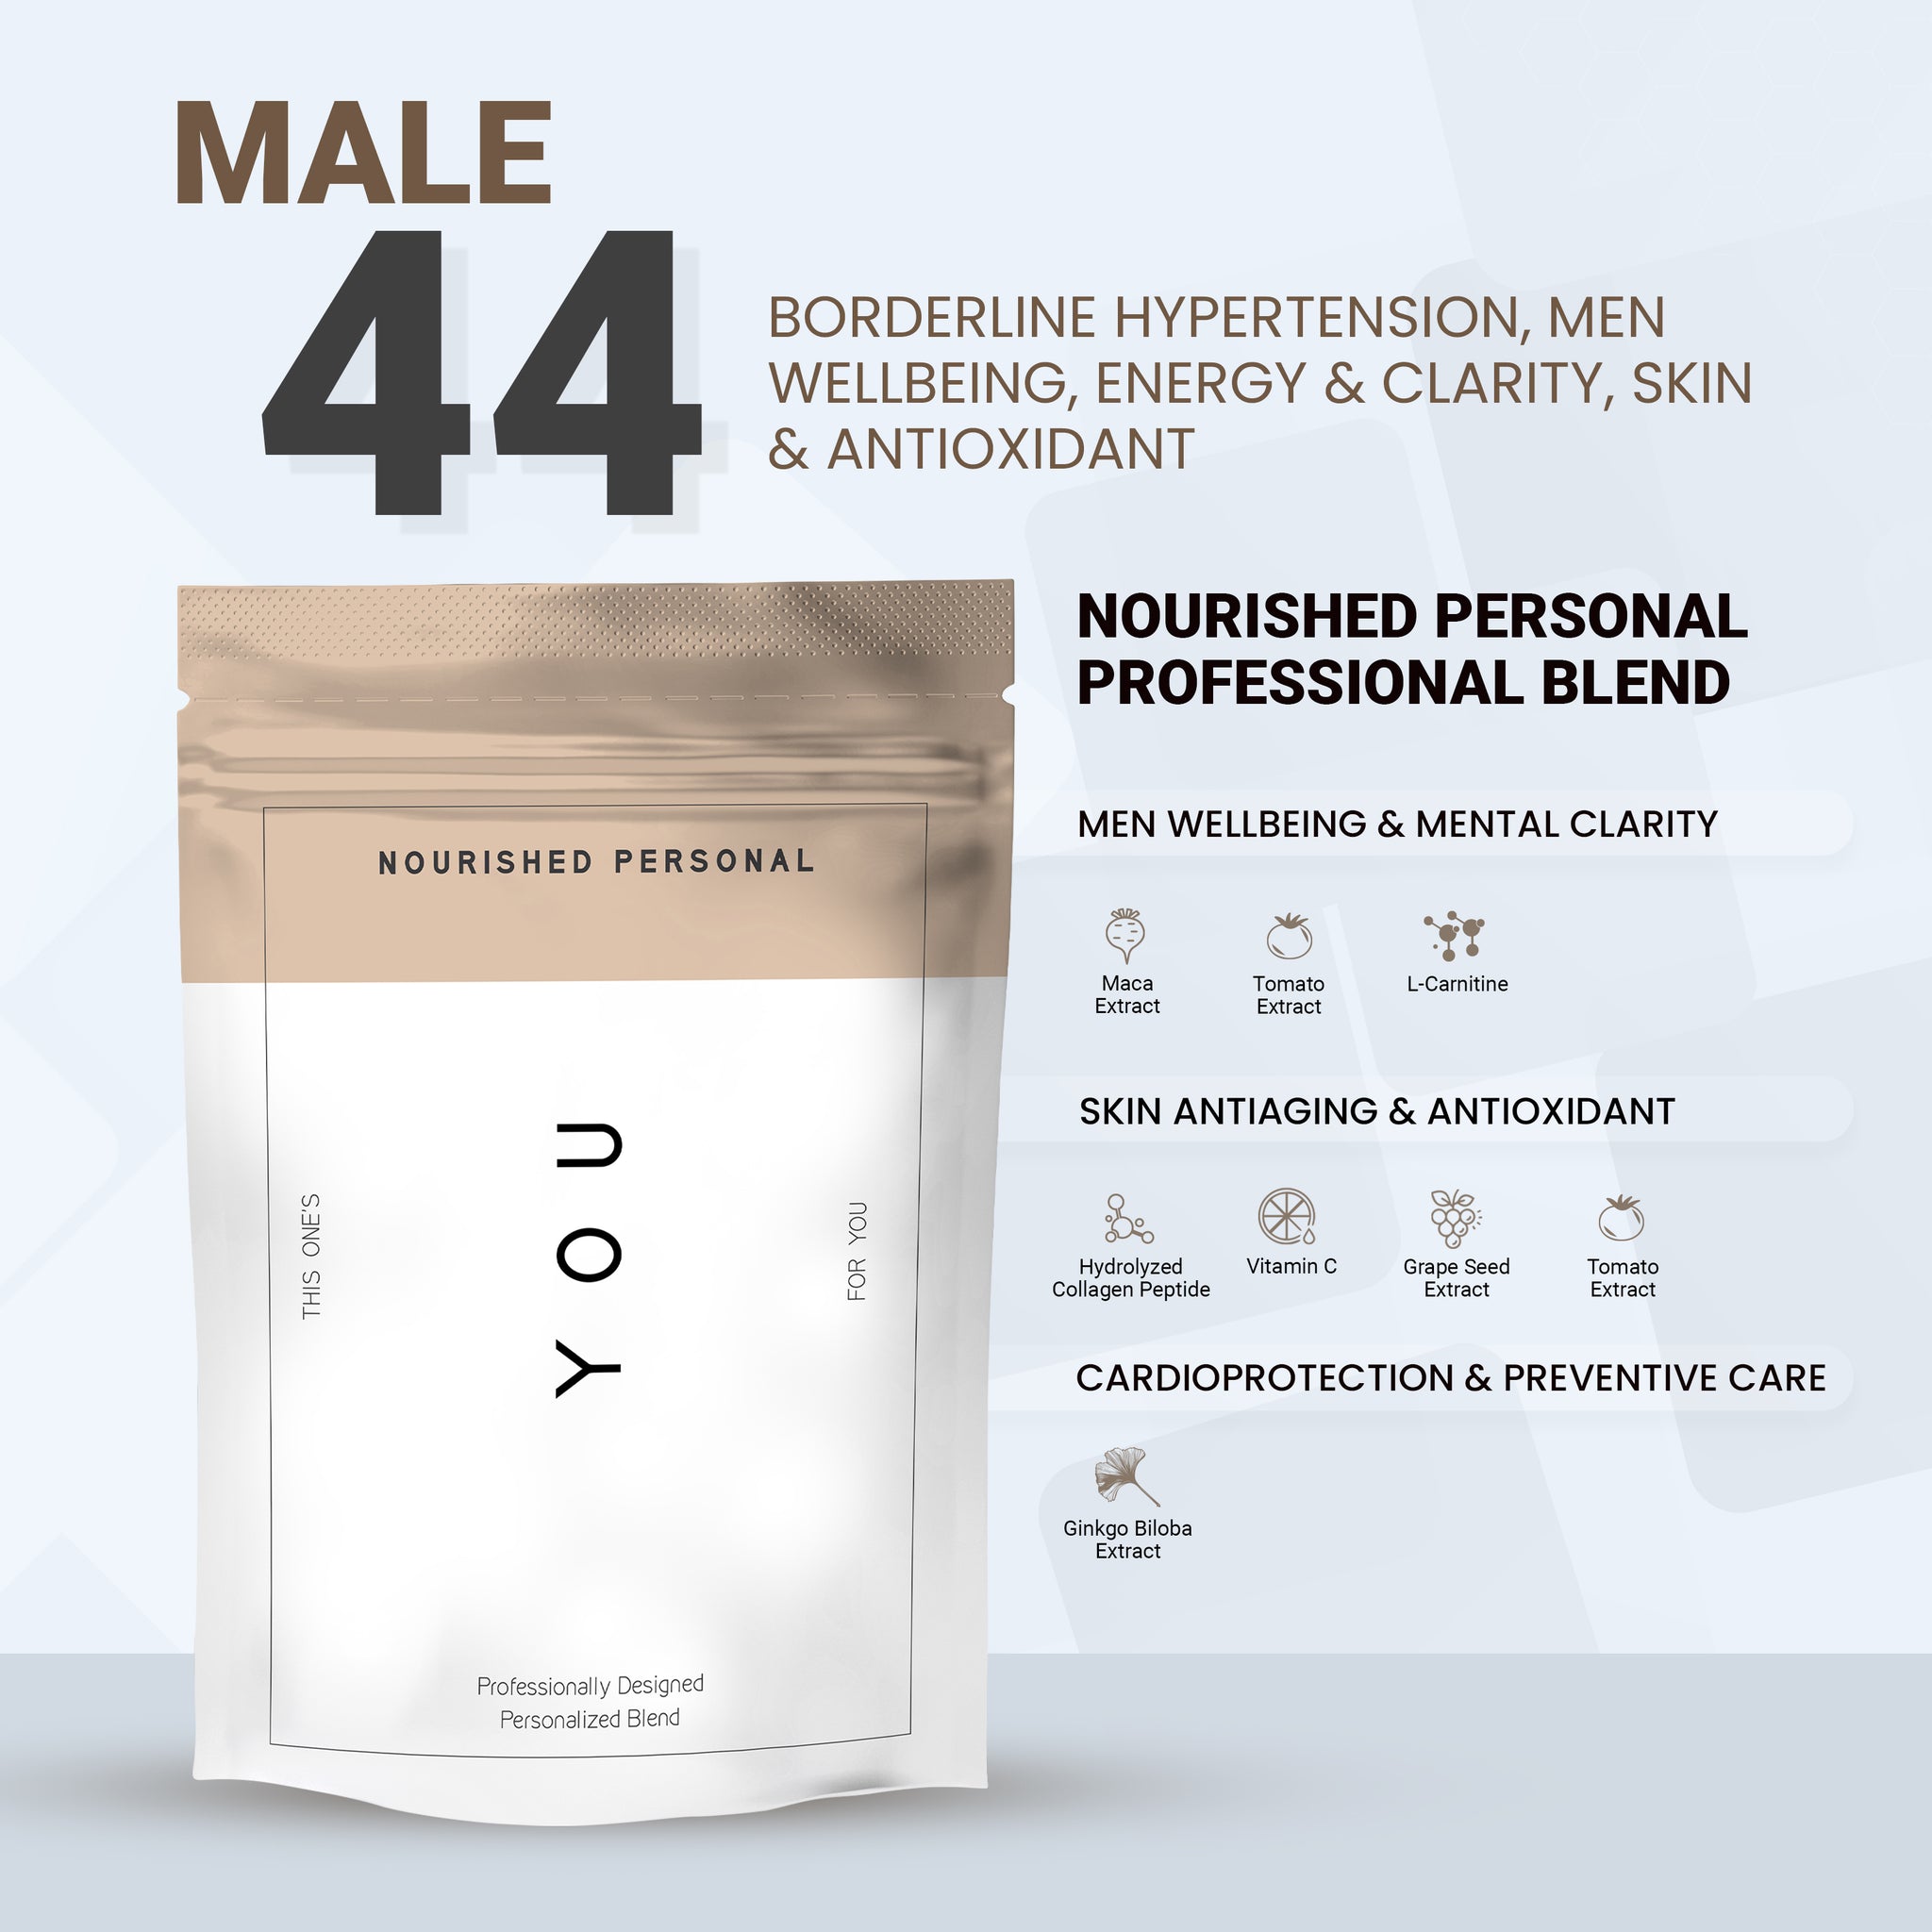 Case Study 29: Male, 44 - Borderline Hypertension, Men Wellbeing, Energy & Clarity, Skin & Antioxidant